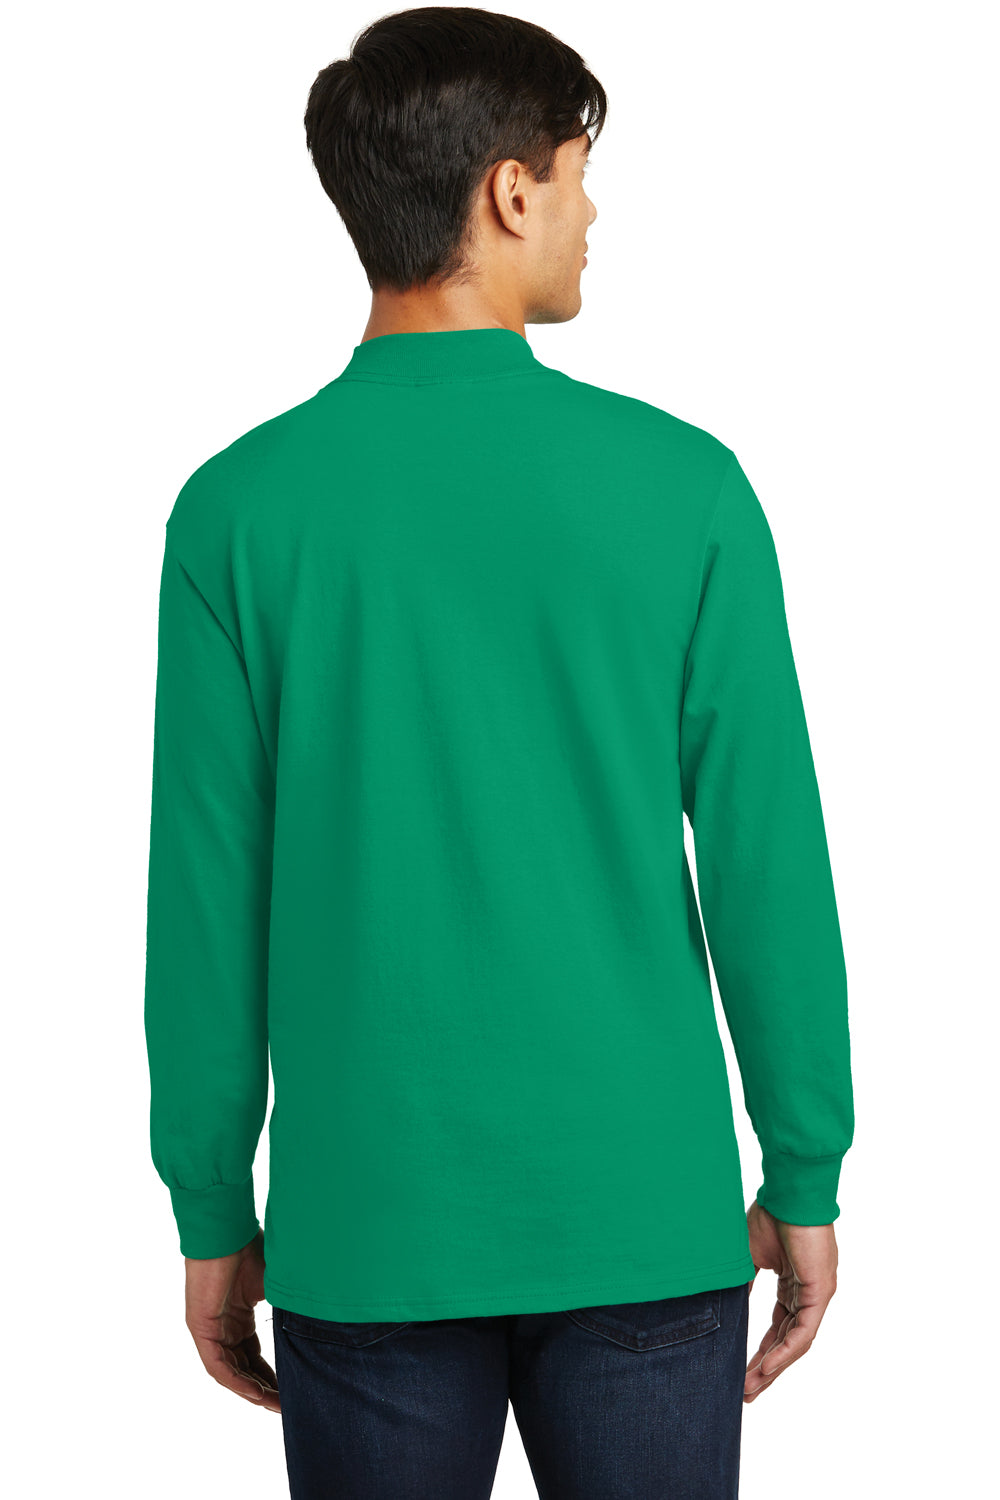 Port & Company PC61M Mens Essential Long Sleeve Mock Neck T-Shirt Kelly Green Back